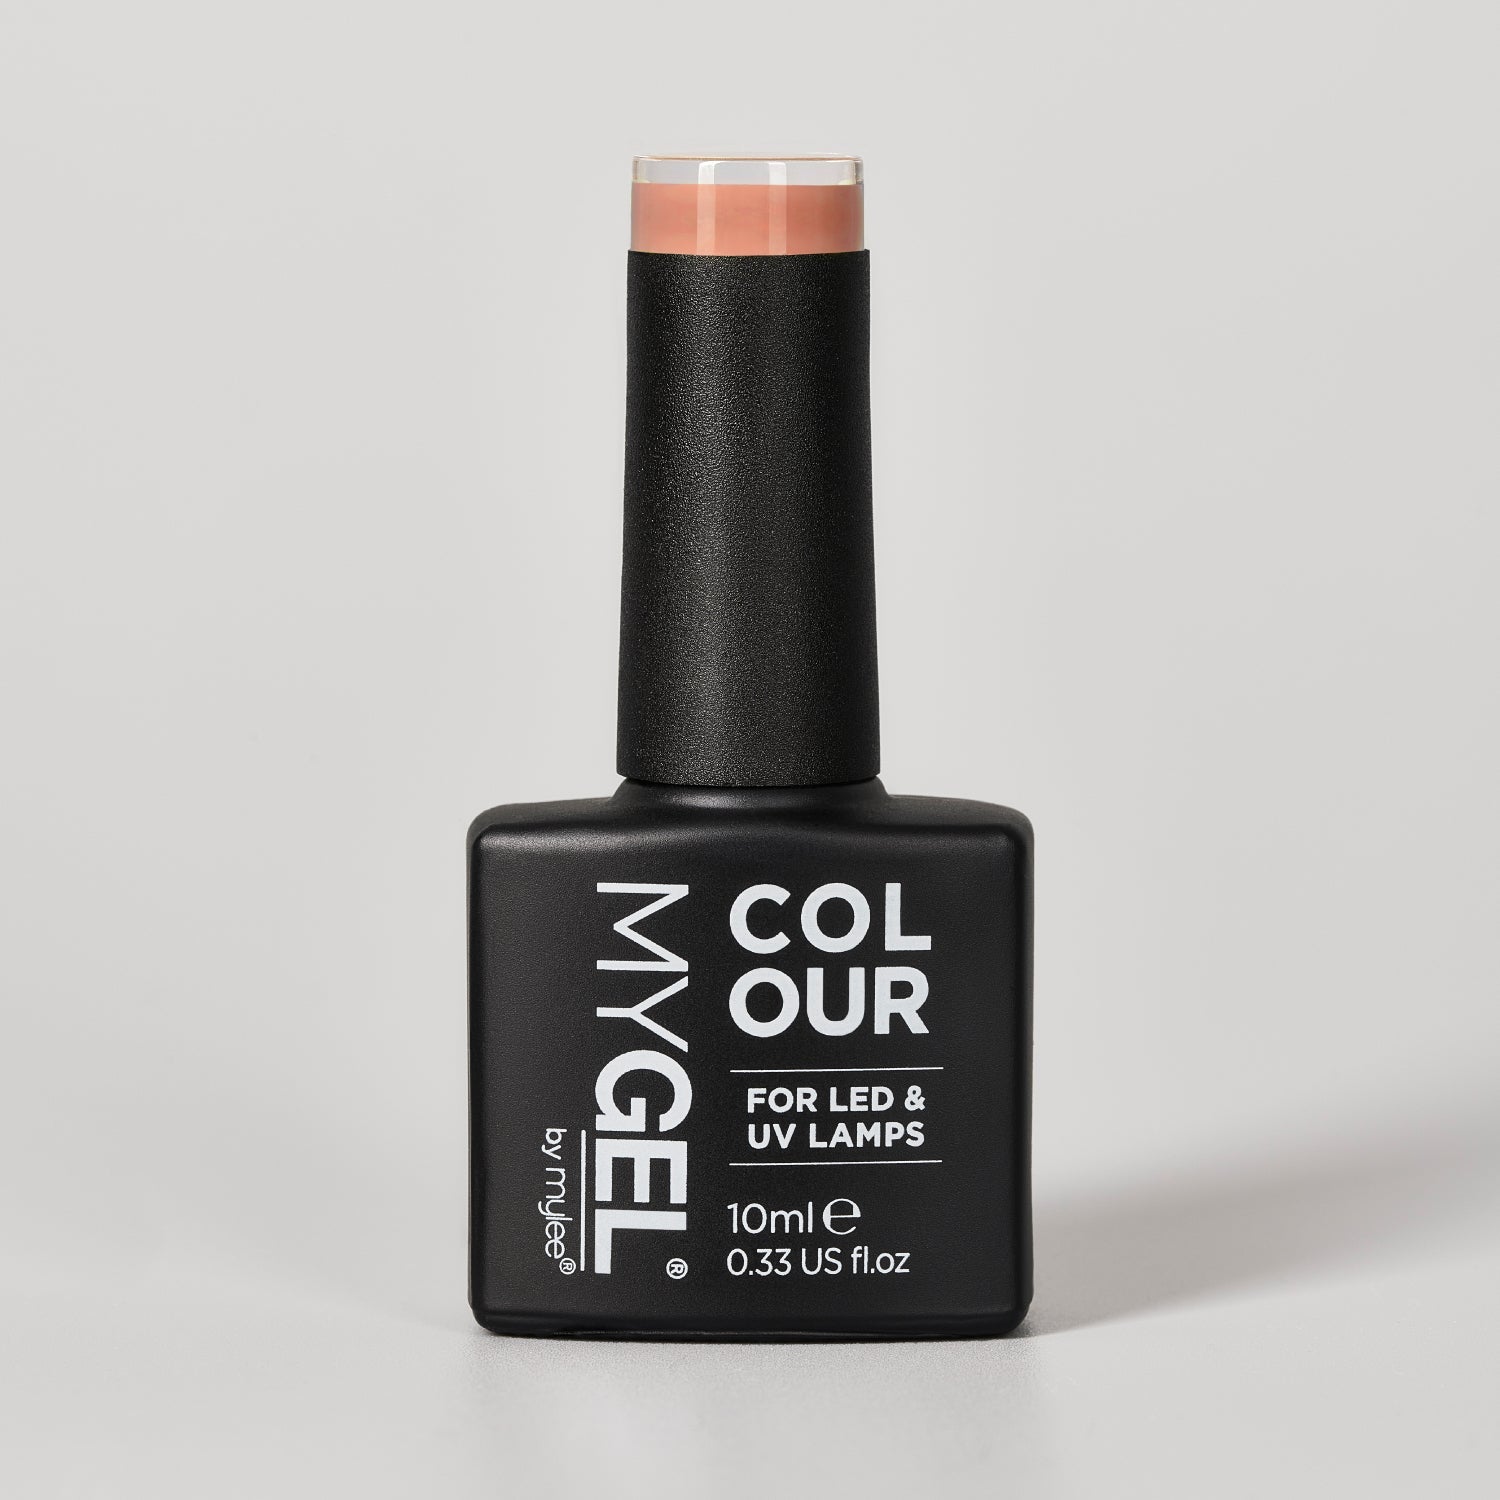 Image of Mylee Caramel LED/UV Nude Gel Nail Polish 10ml – Long Lasting At Home Manicure/Pedicure, High Gloss And Chip Free Wear Nail Varnish